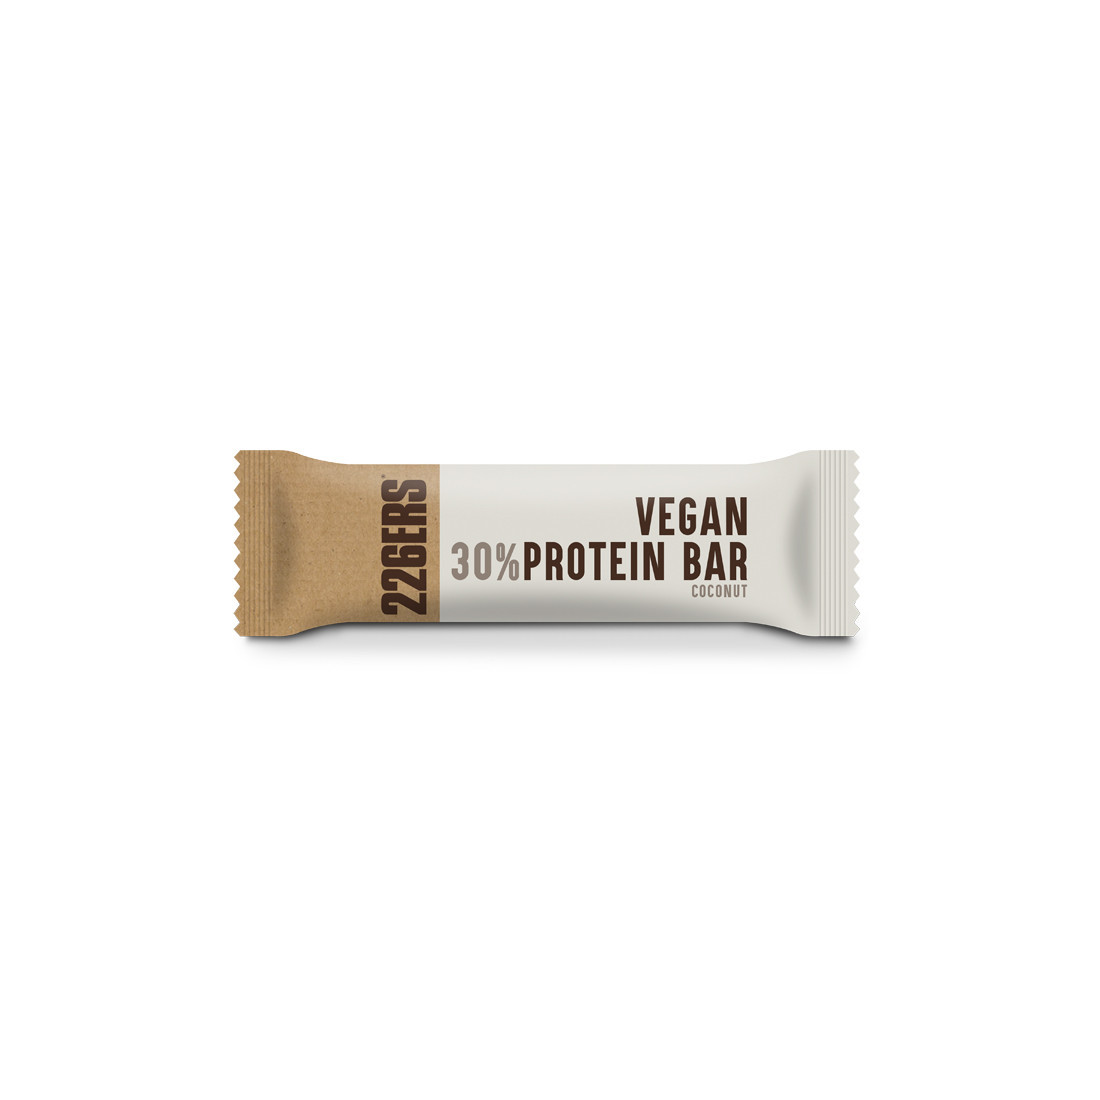 VEGAN PROTEIN BAR - Vegan Protein Bar